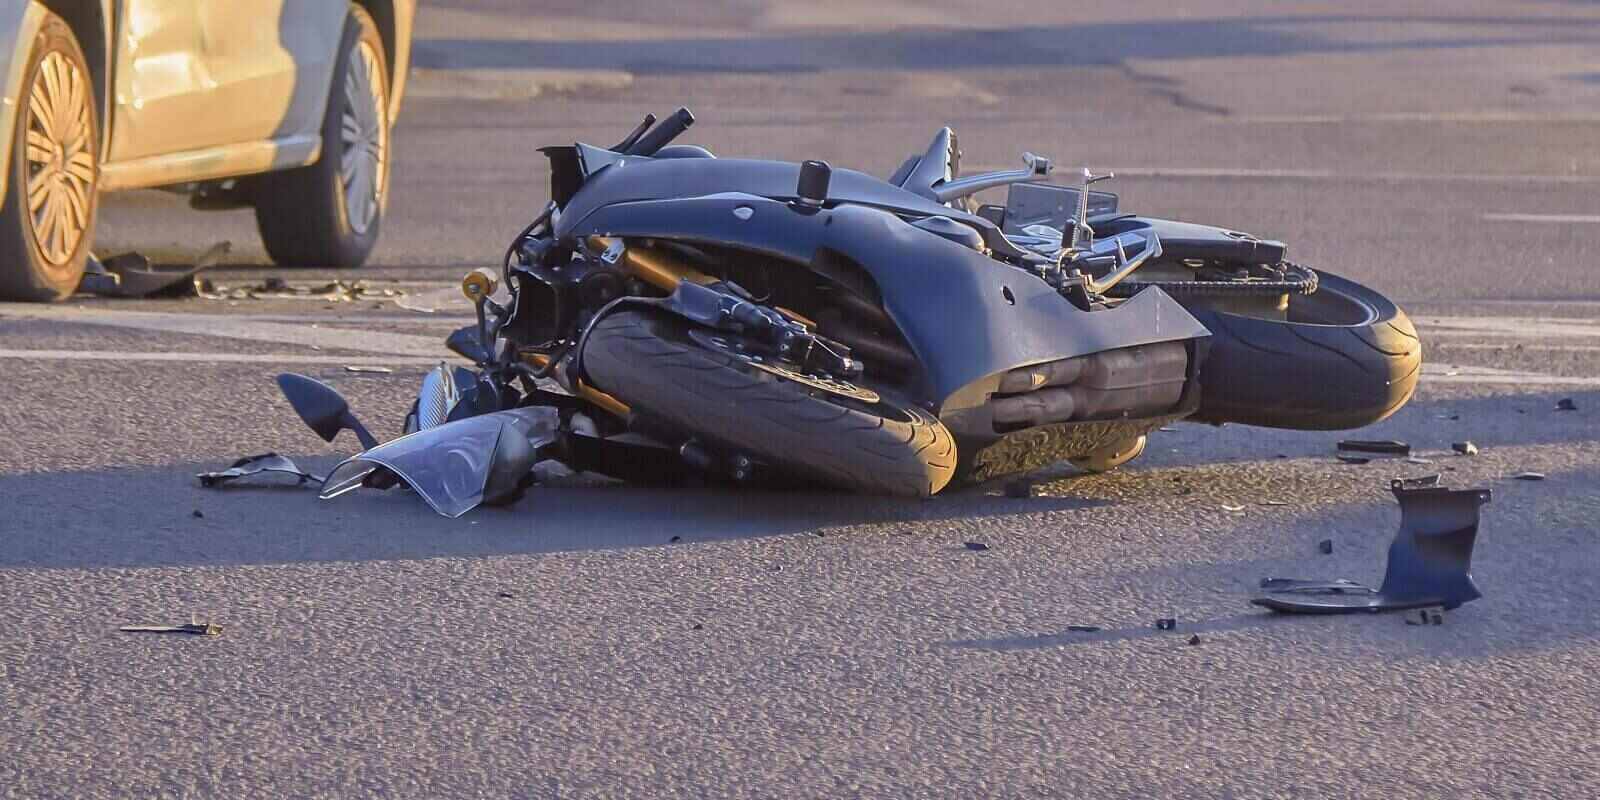 motobike crashed into a car a motorcyclist